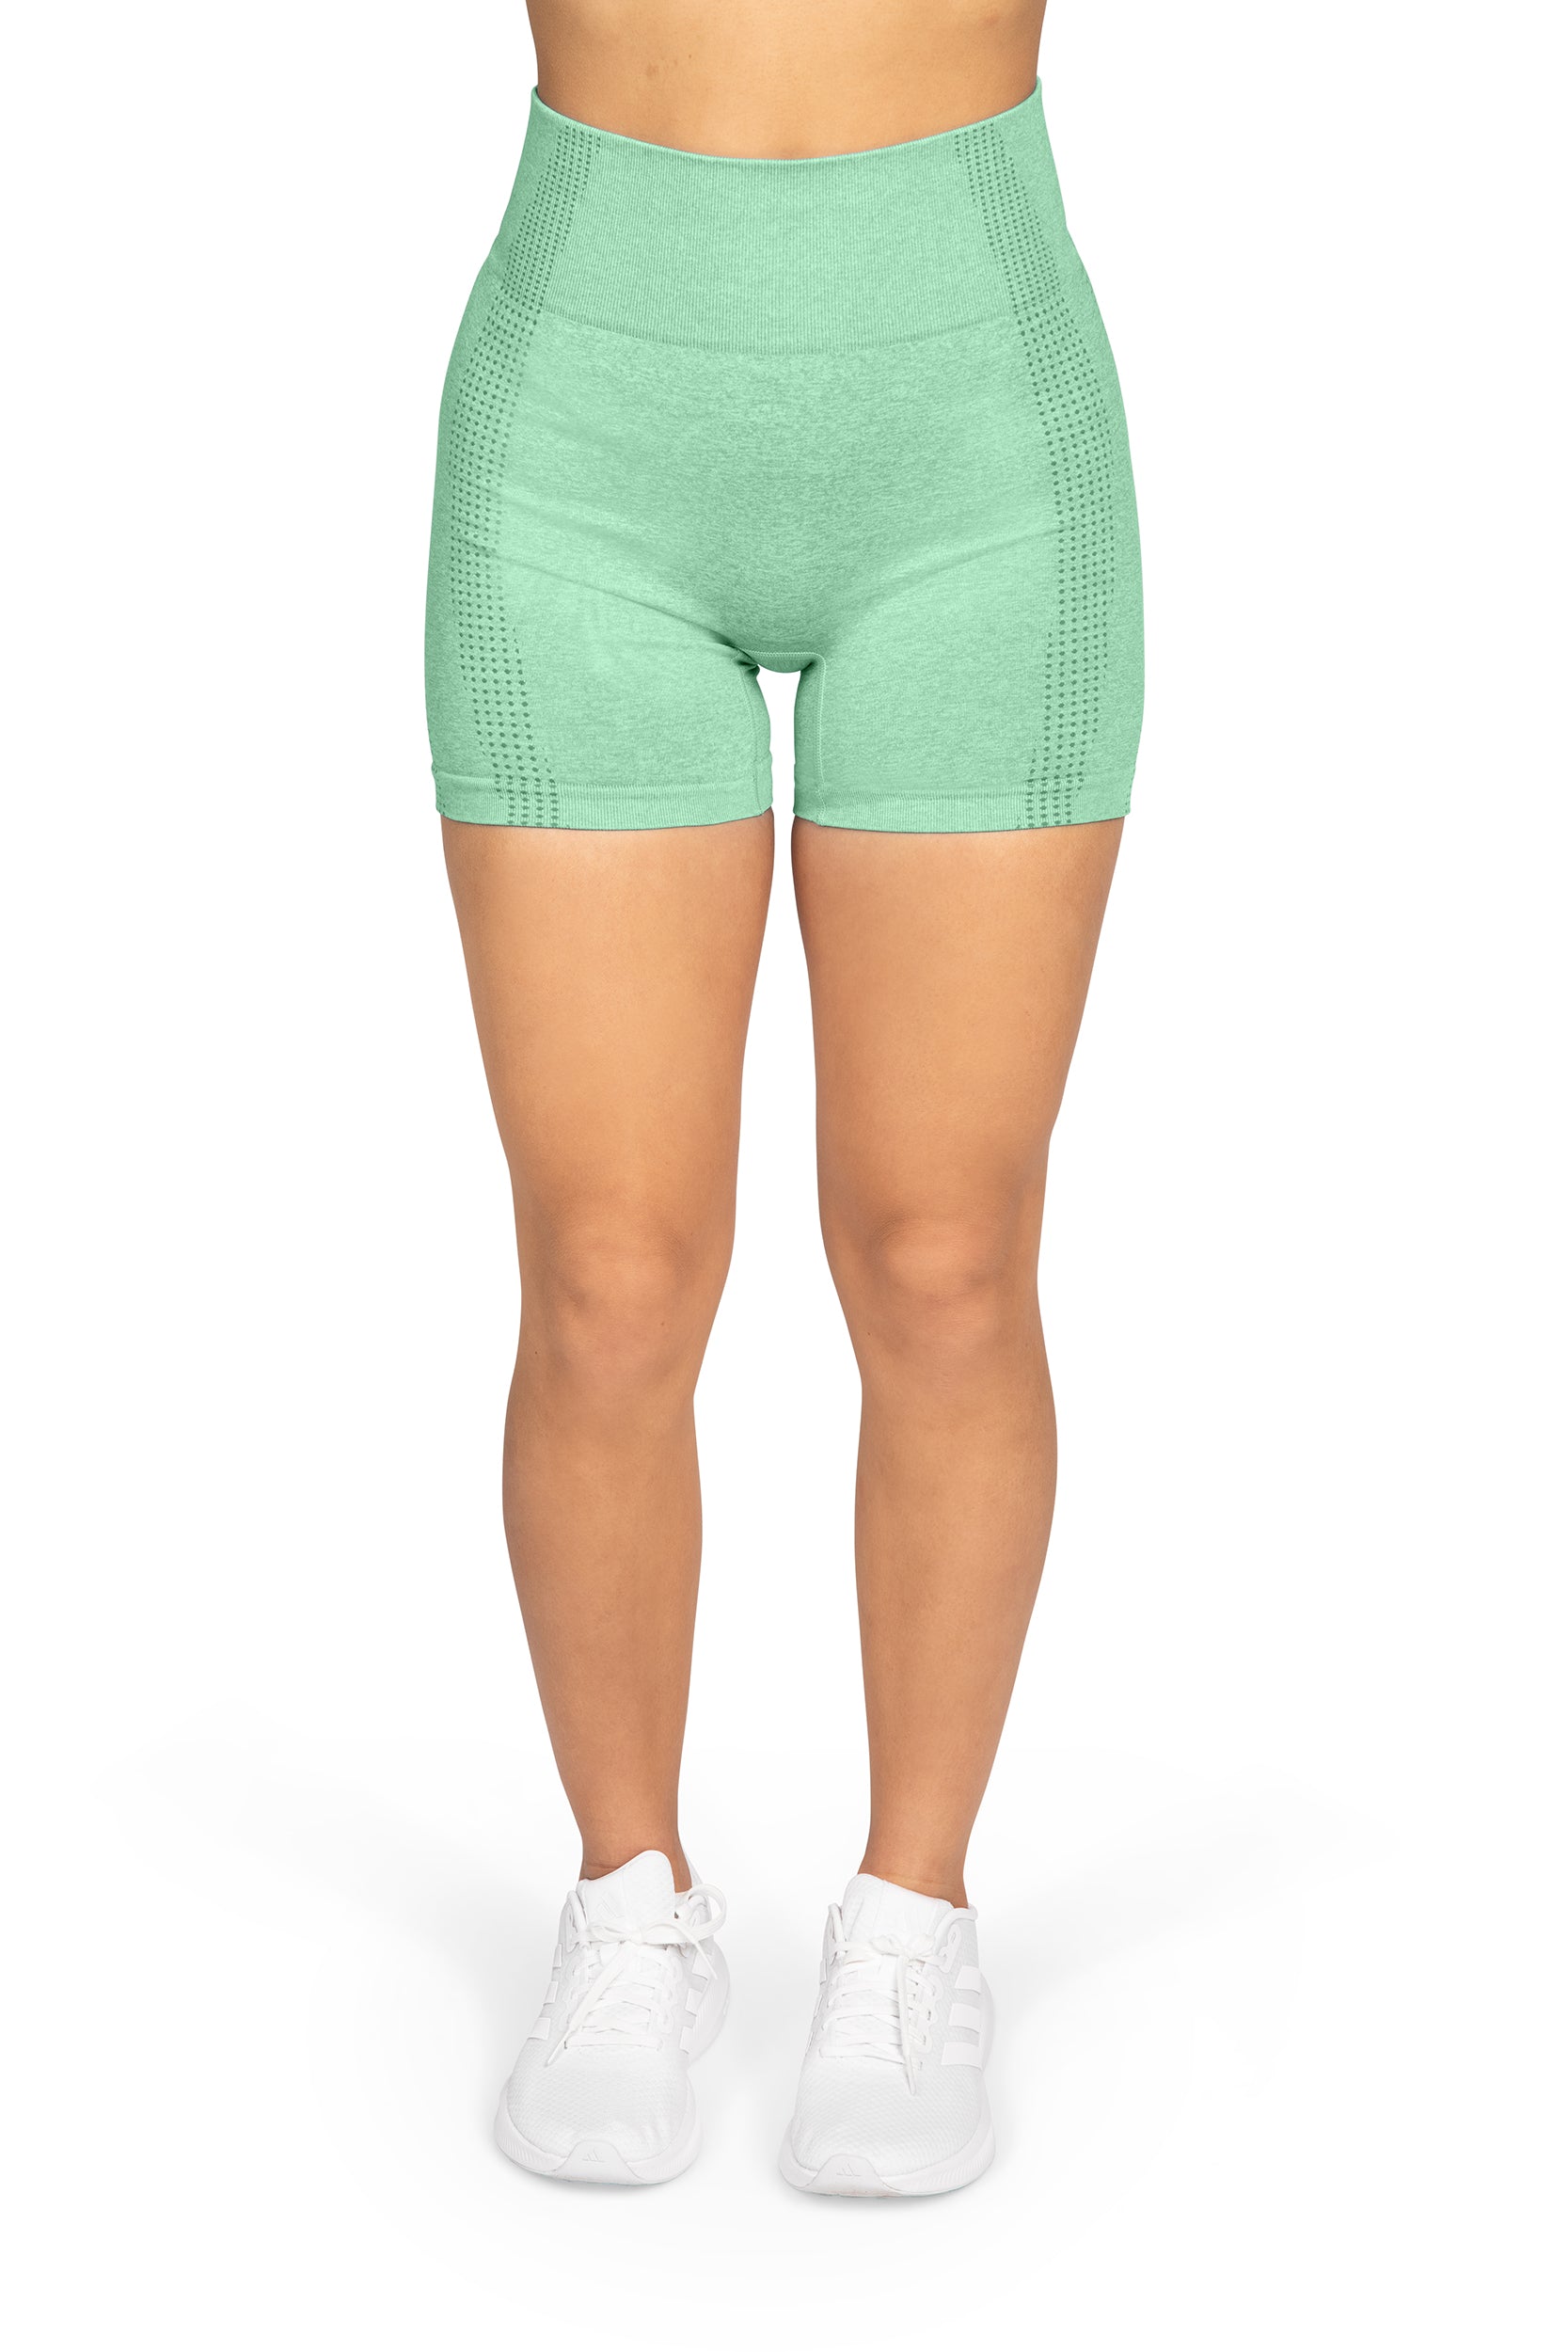 Womens Mint Myrtle Beach Soffe Shorts